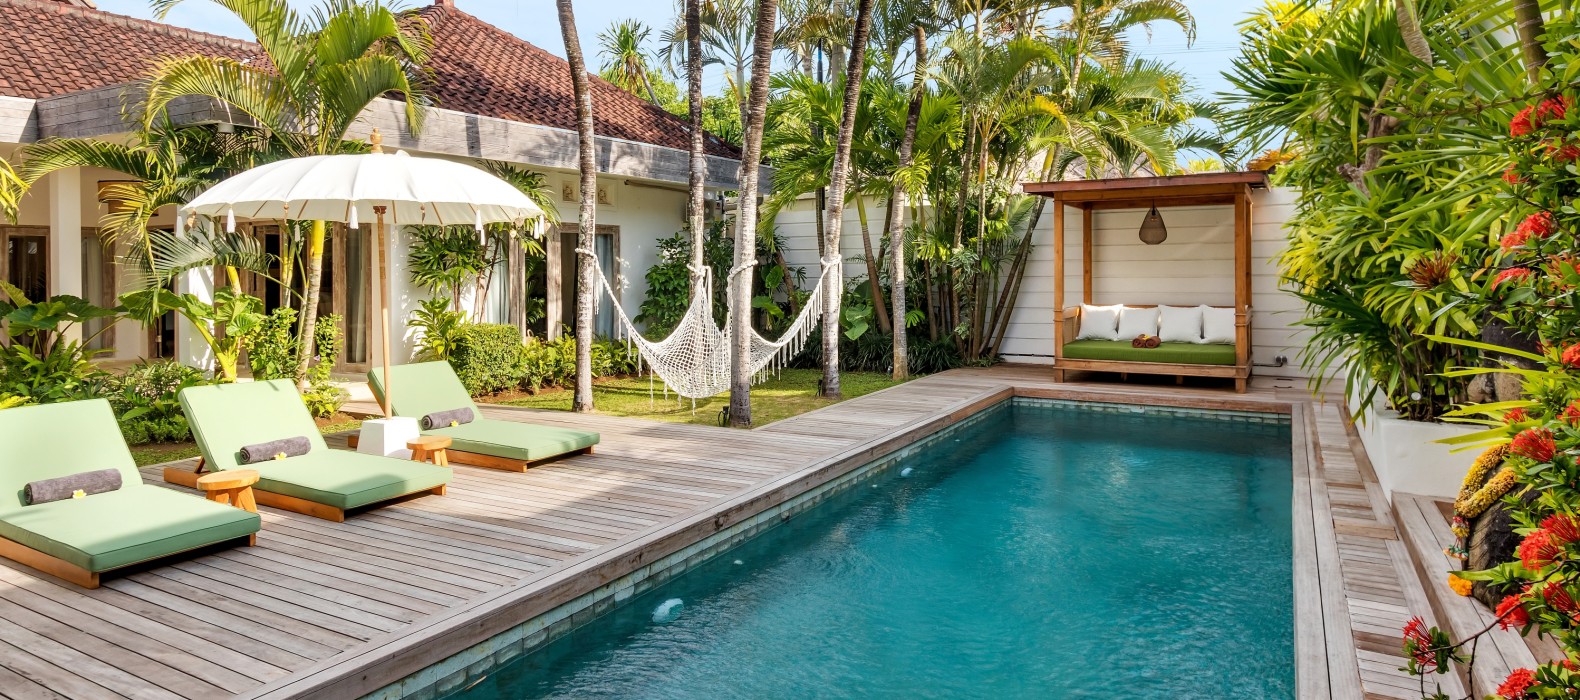 Exterior pool view of Villa Gauguin in Bali